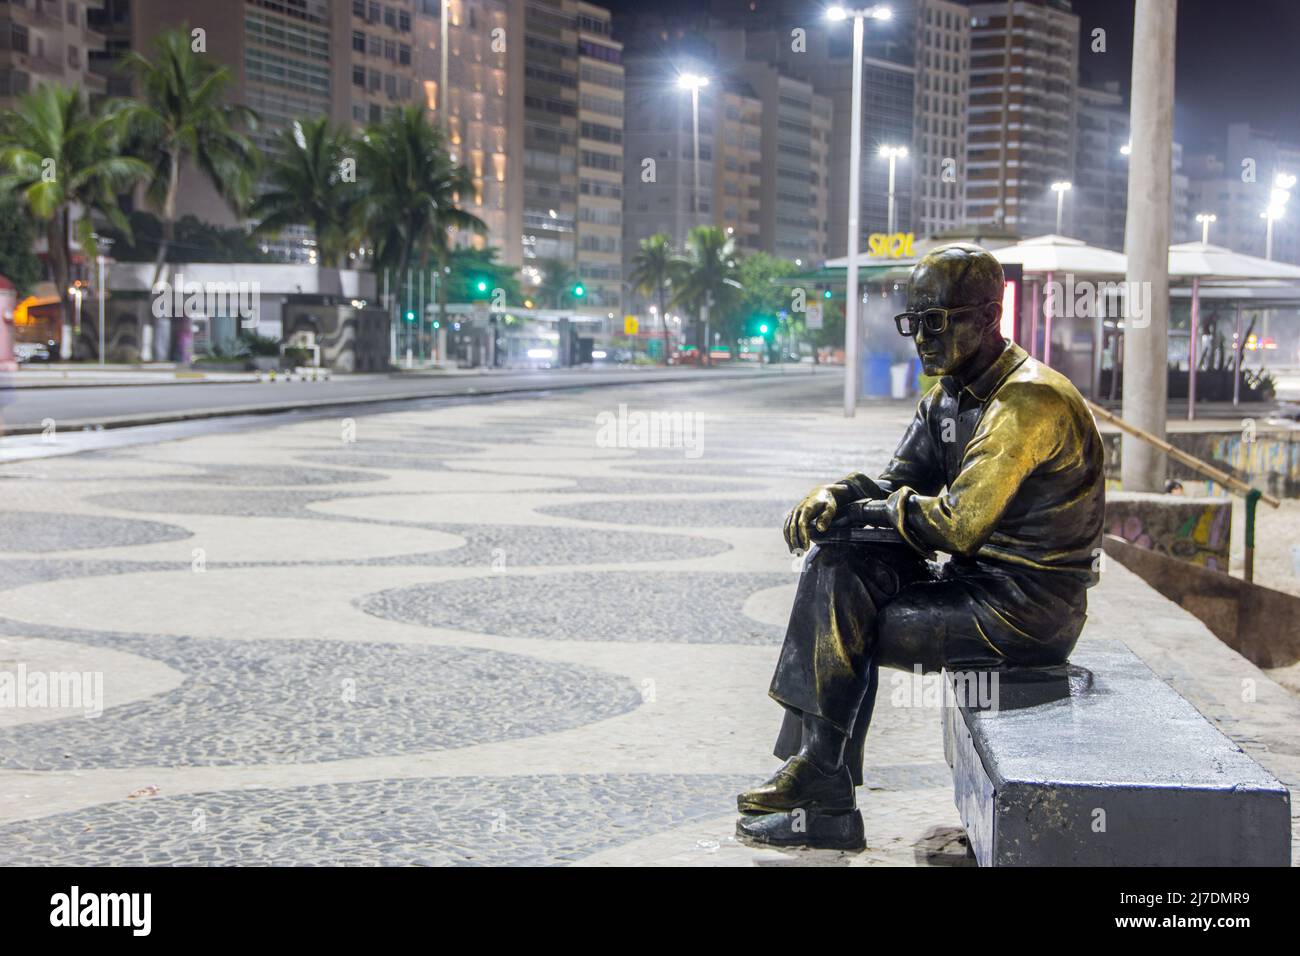 Statue of the poet by Carlos Drummond de Andrade in Copacabana in Rio de Janeiro Brazil - March 06, 2022: Statue of Carlos drummond de Andrade in Rio Stock Photo